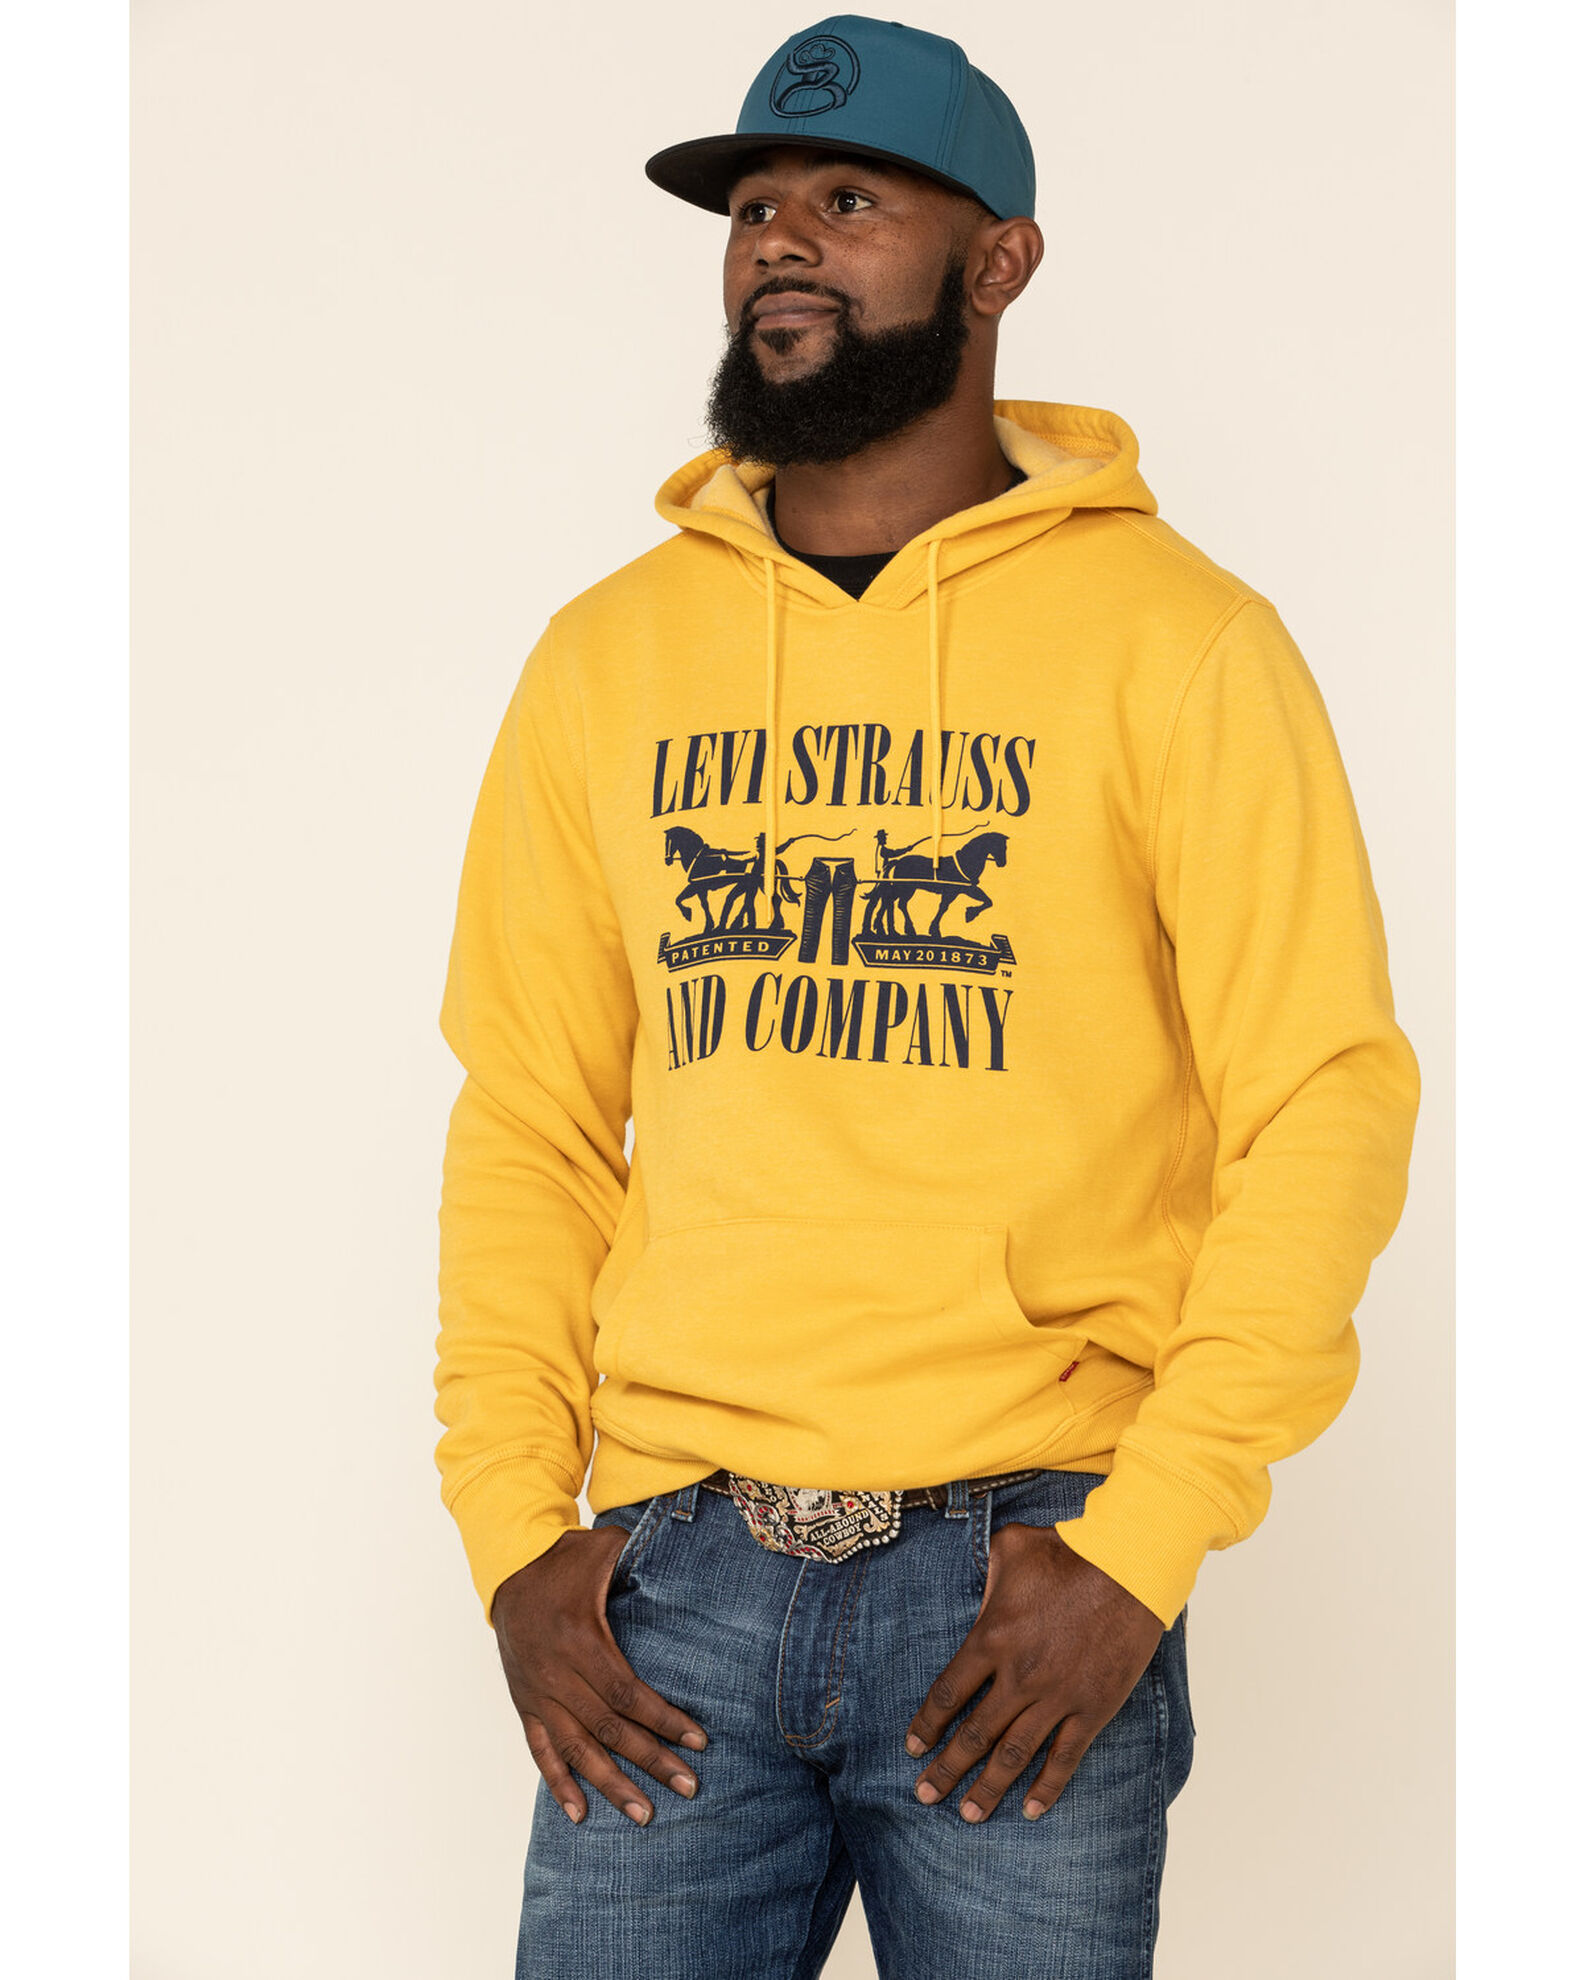 Levi's Men's Yolk Yellow Horses Graphic Hooded Sweatshirt | Boot Barn